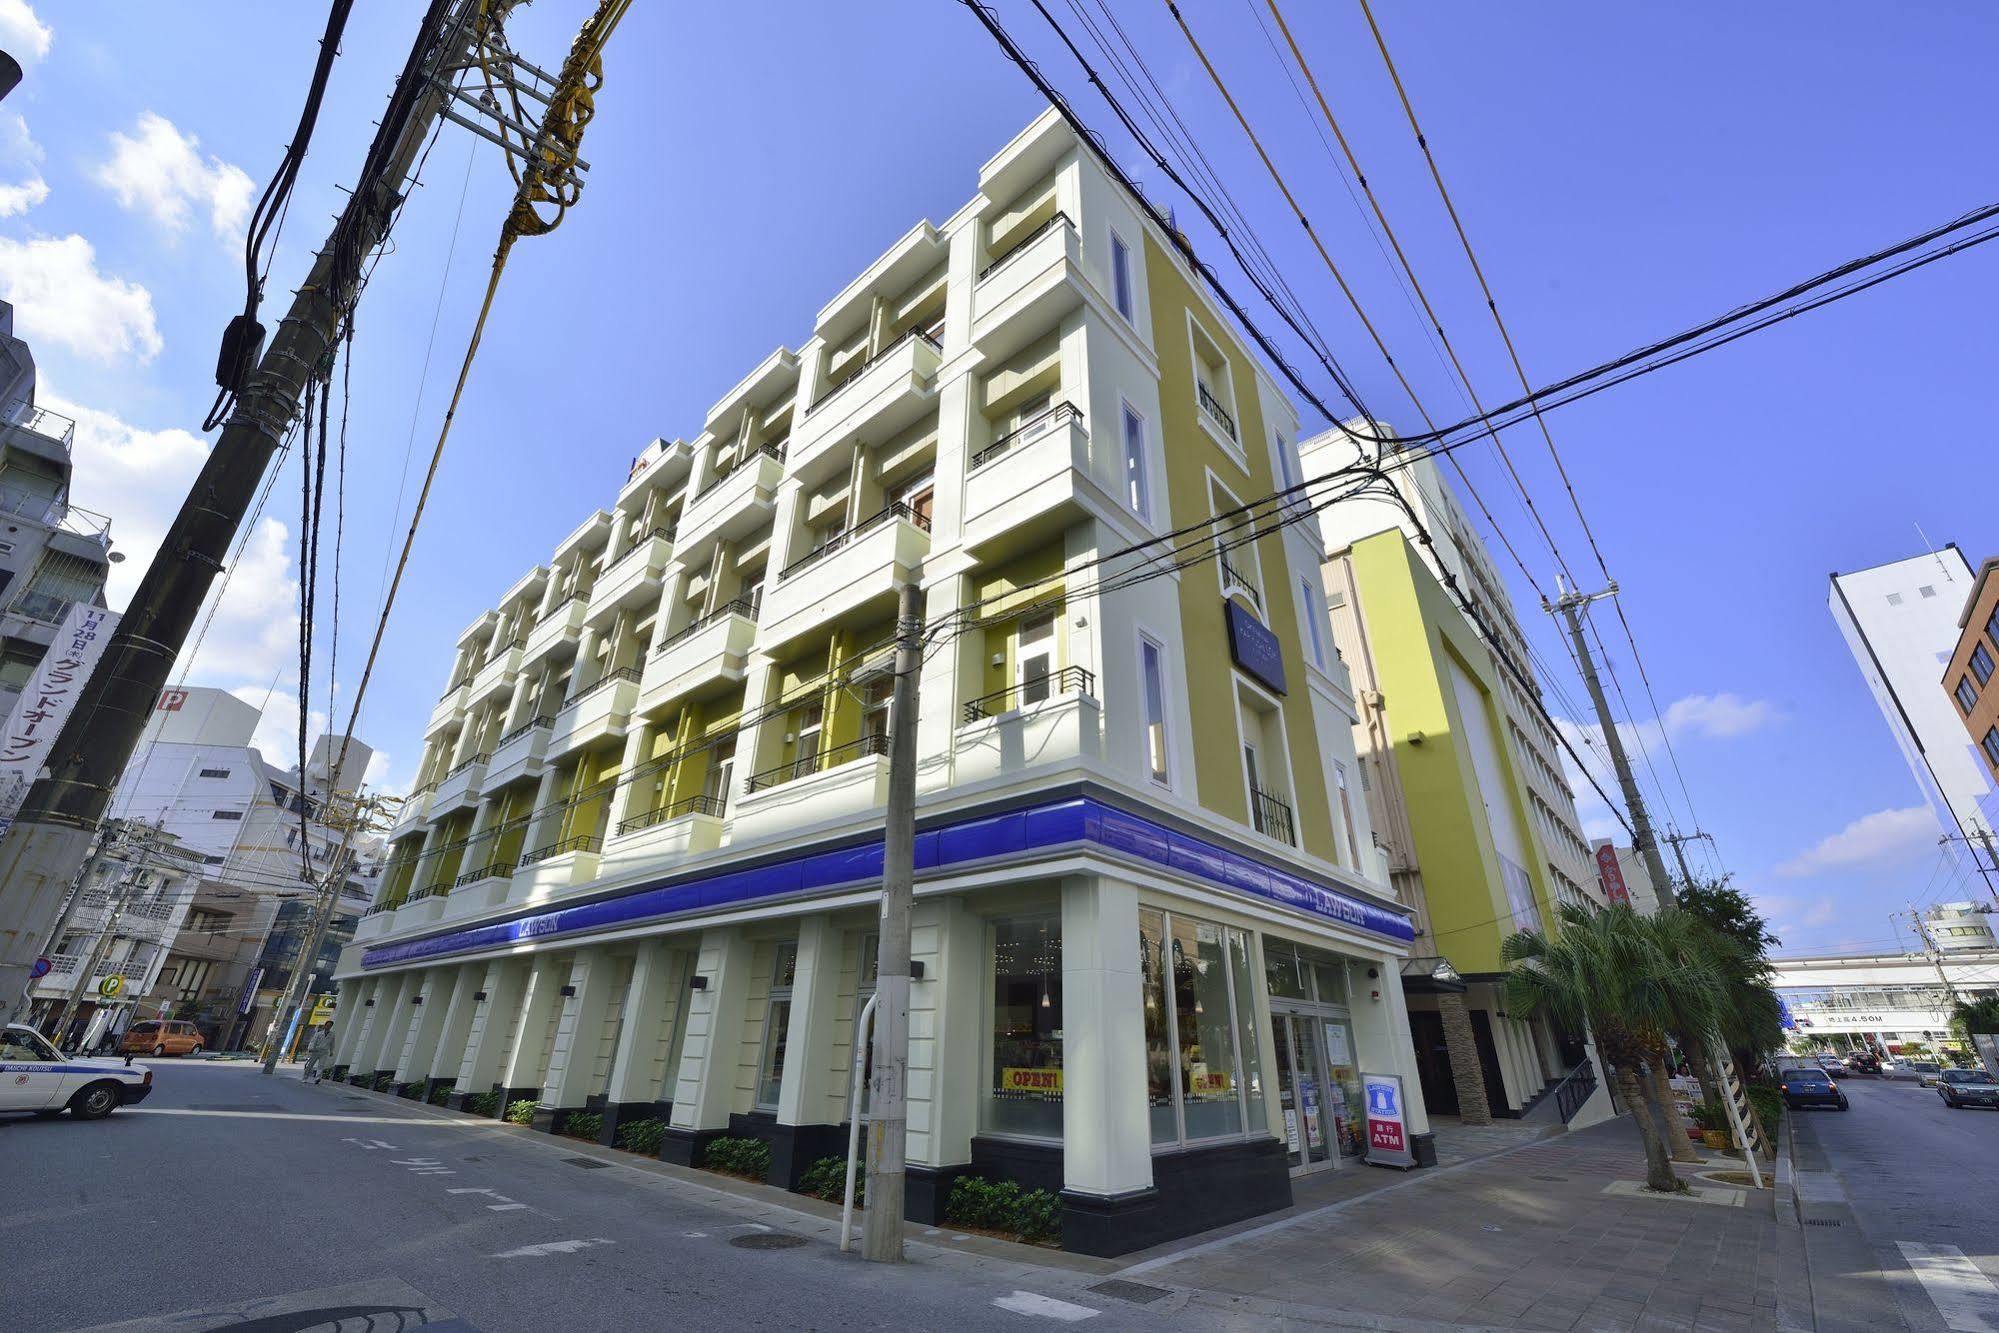 Hôtel Kariyushi Lch. Izumizaki Kencho Mae à Naha Extérieur photo